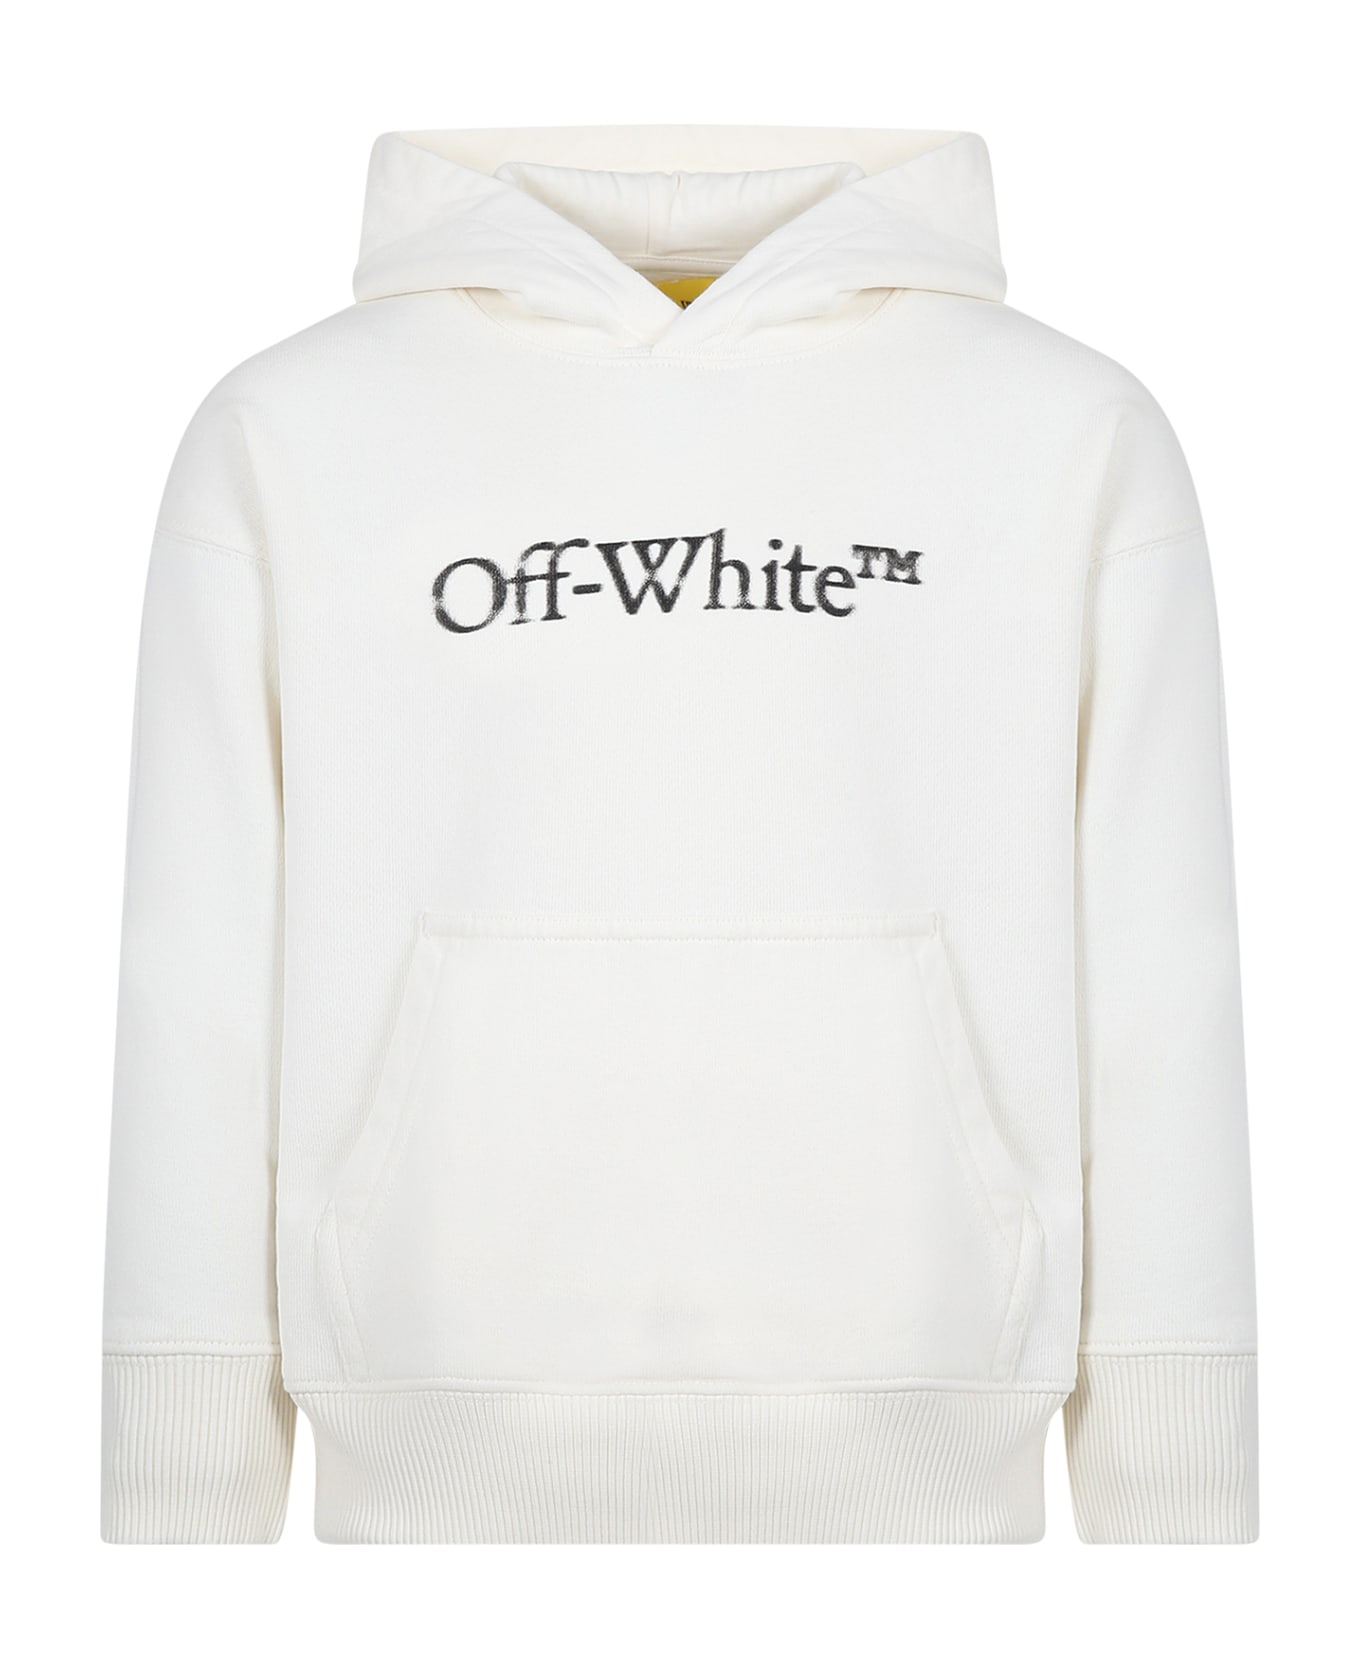 Off-White White Sweatshirt For Kids With Logo - Off White